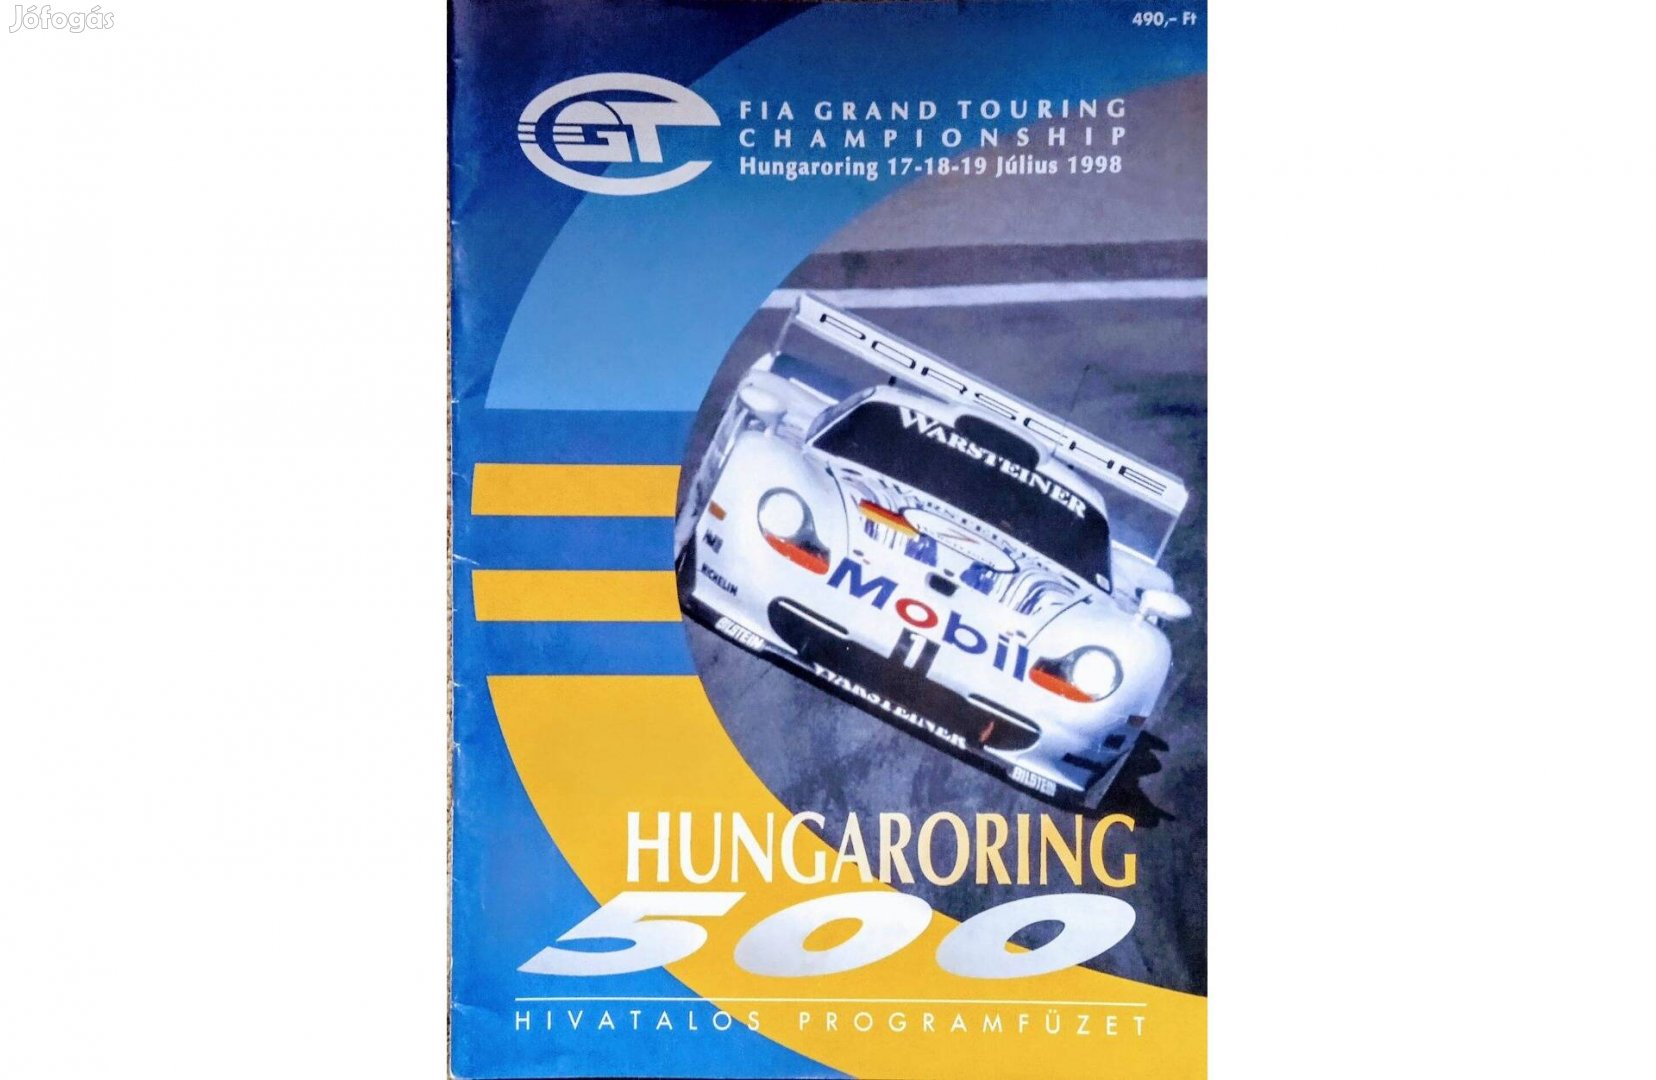 FIA GRAND Touring Championship Hungaroring 1998